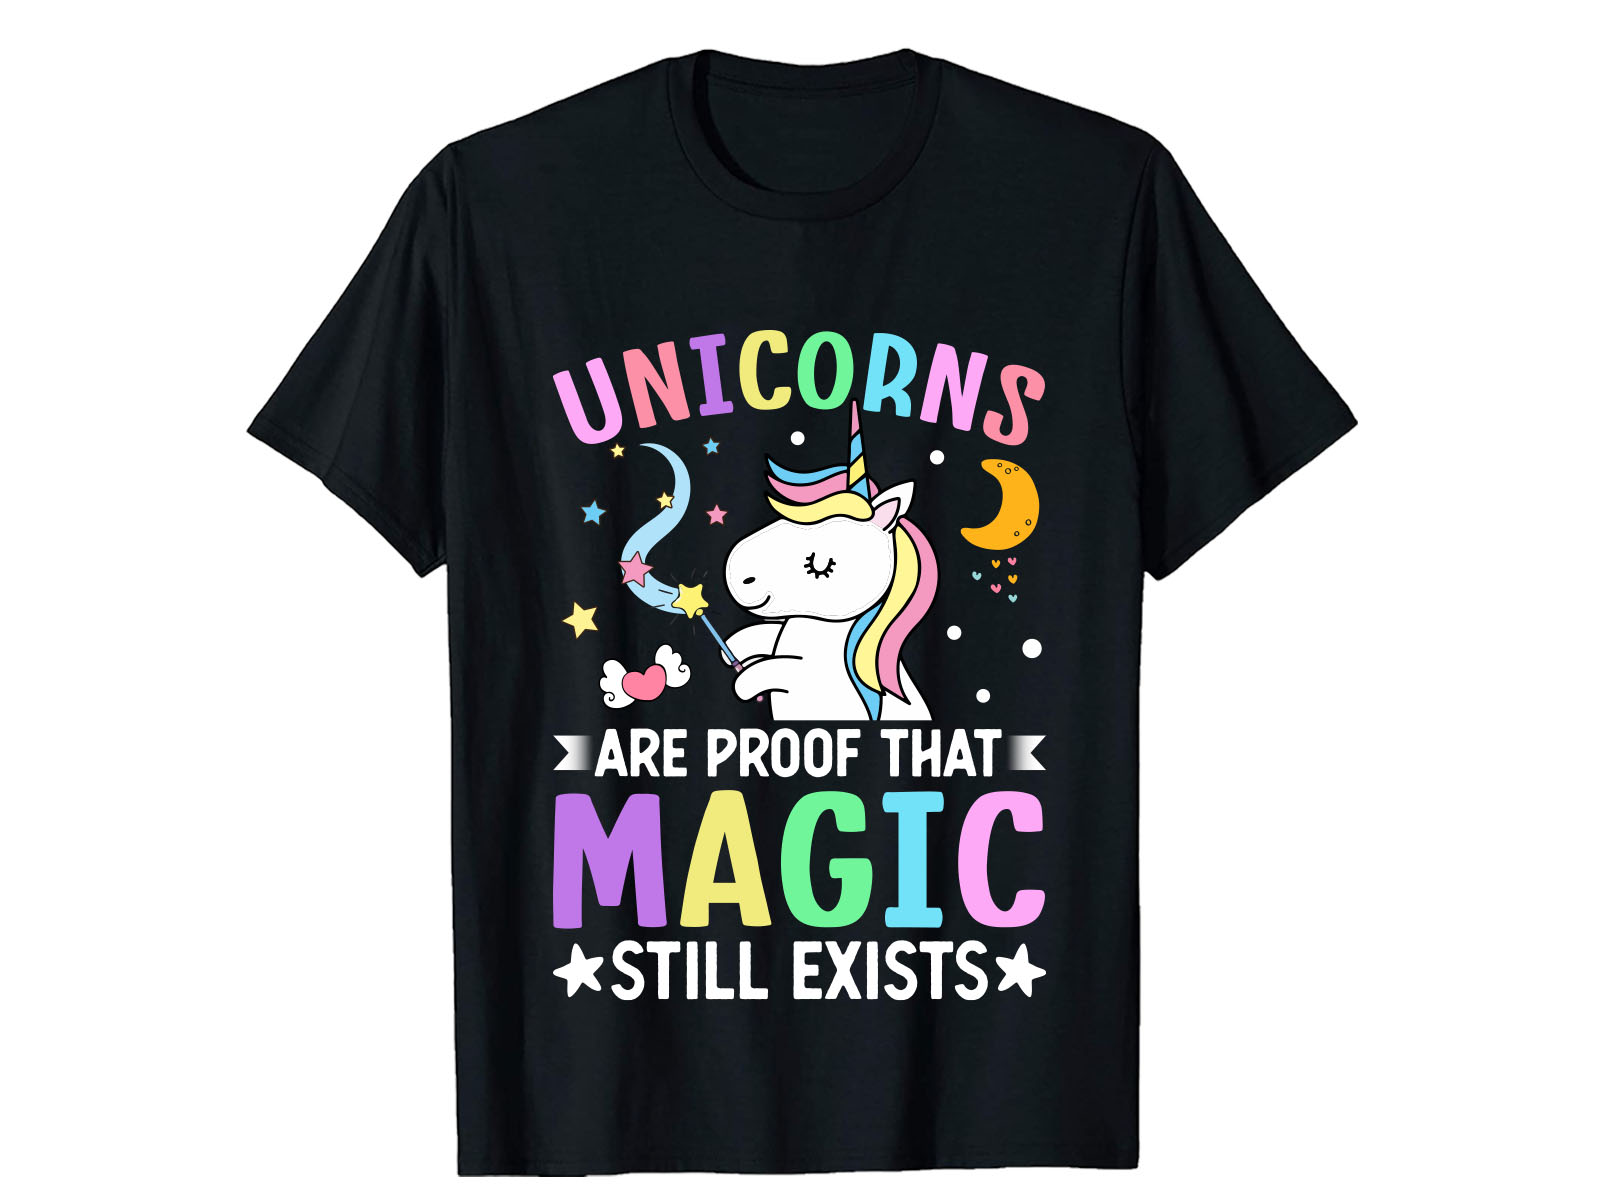 Unicorn T-Shirt Designs Bundle Free V.1